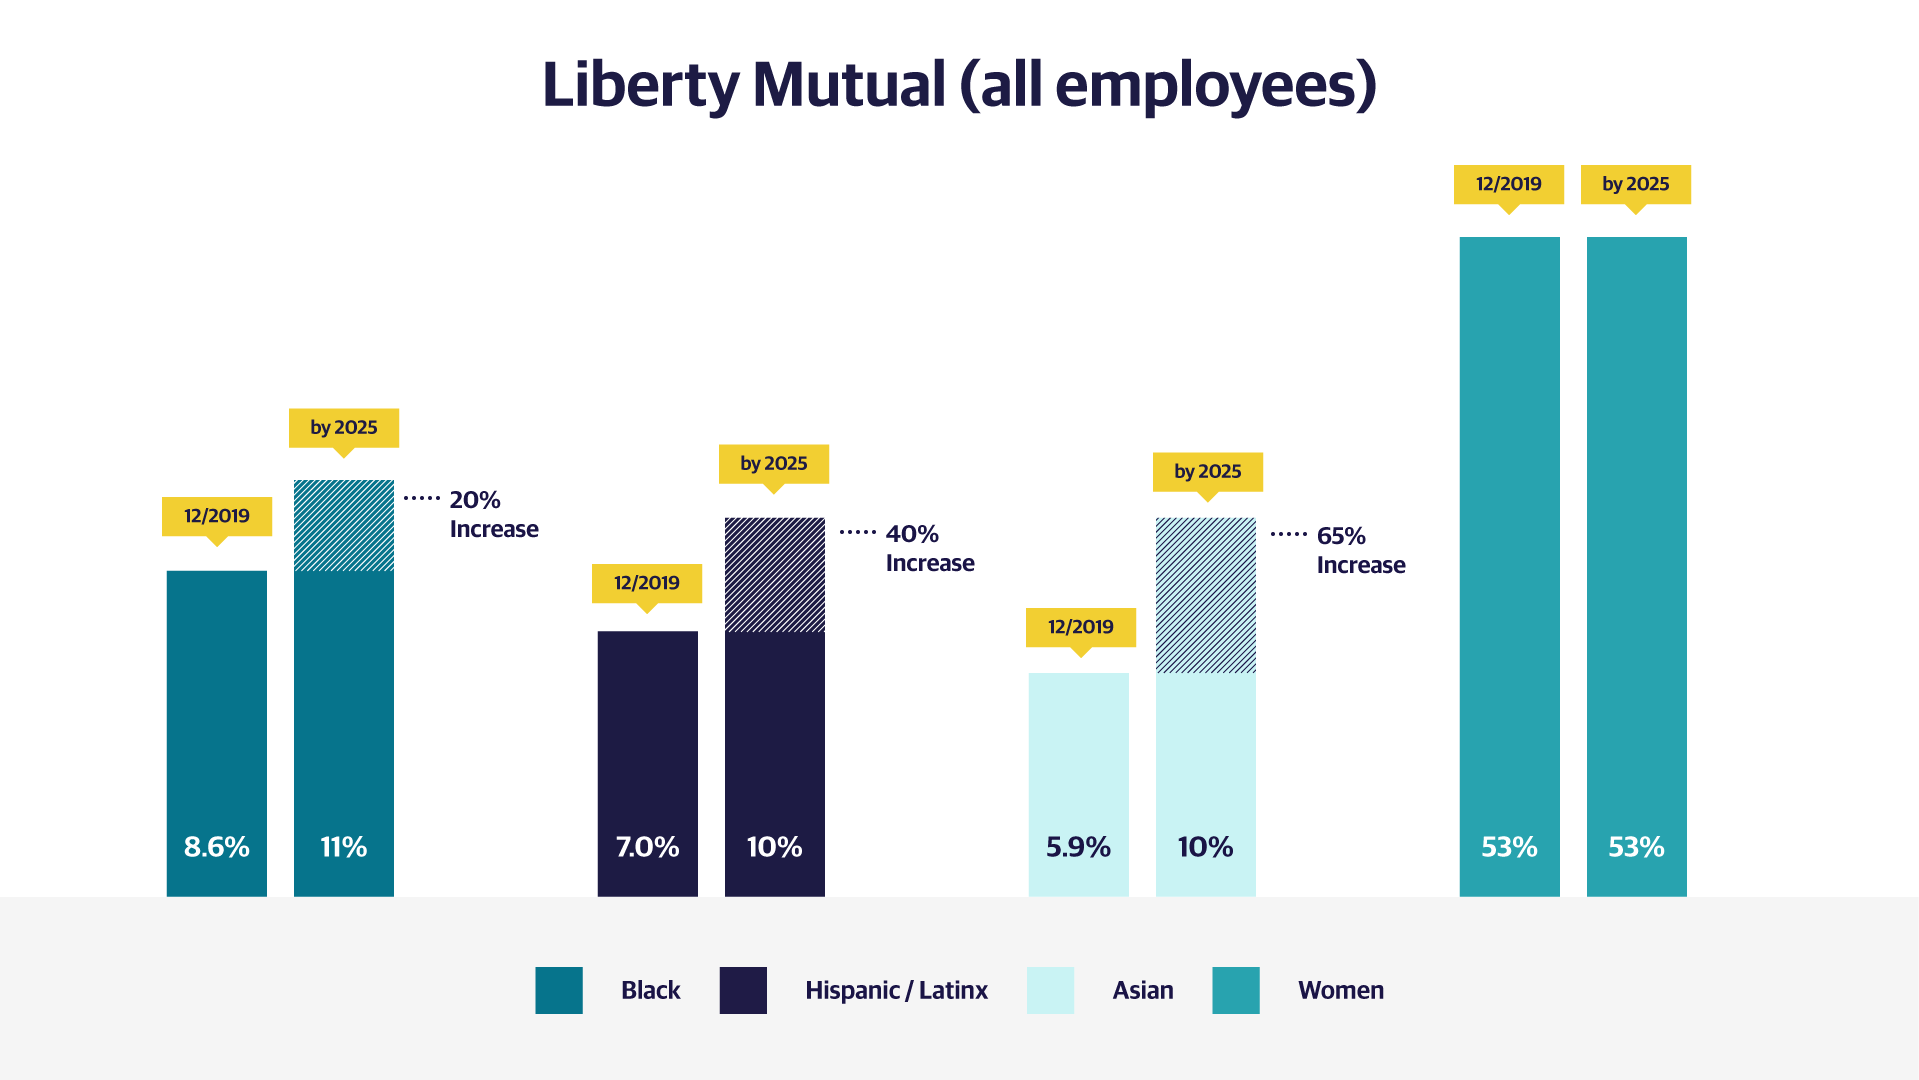 (slide 1 of 2) Liberty Mutual bar chart depicting diversity makeup of the organization as of December 2019. 